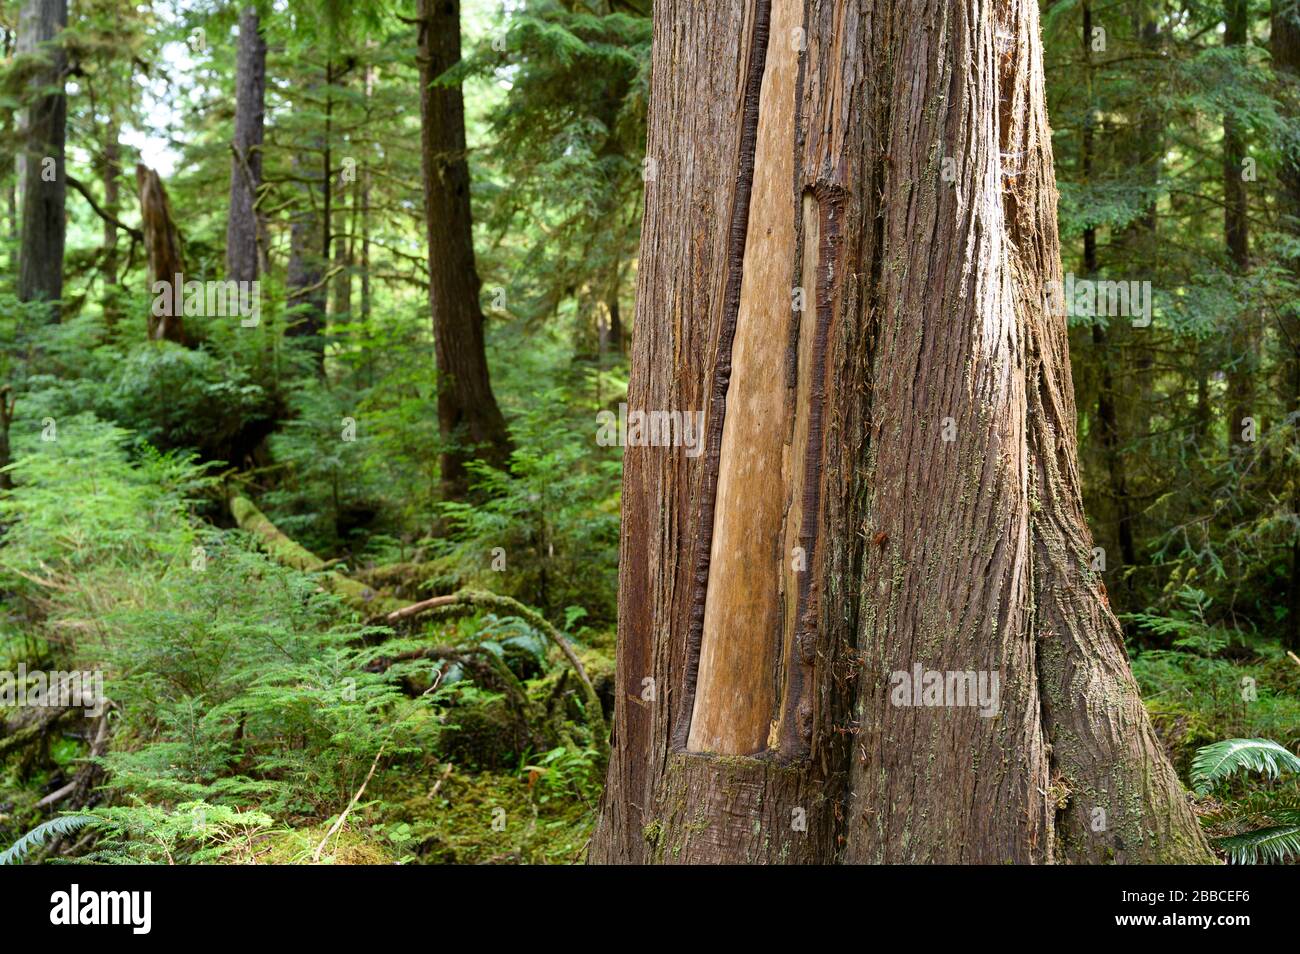 Árbol culturalmente modificado, CMT, Golden Spruce Trail, Haida Gwaii, anteriormente conocido como Queen Charlotte Islands, British Columbia, Canadá Foto de stock